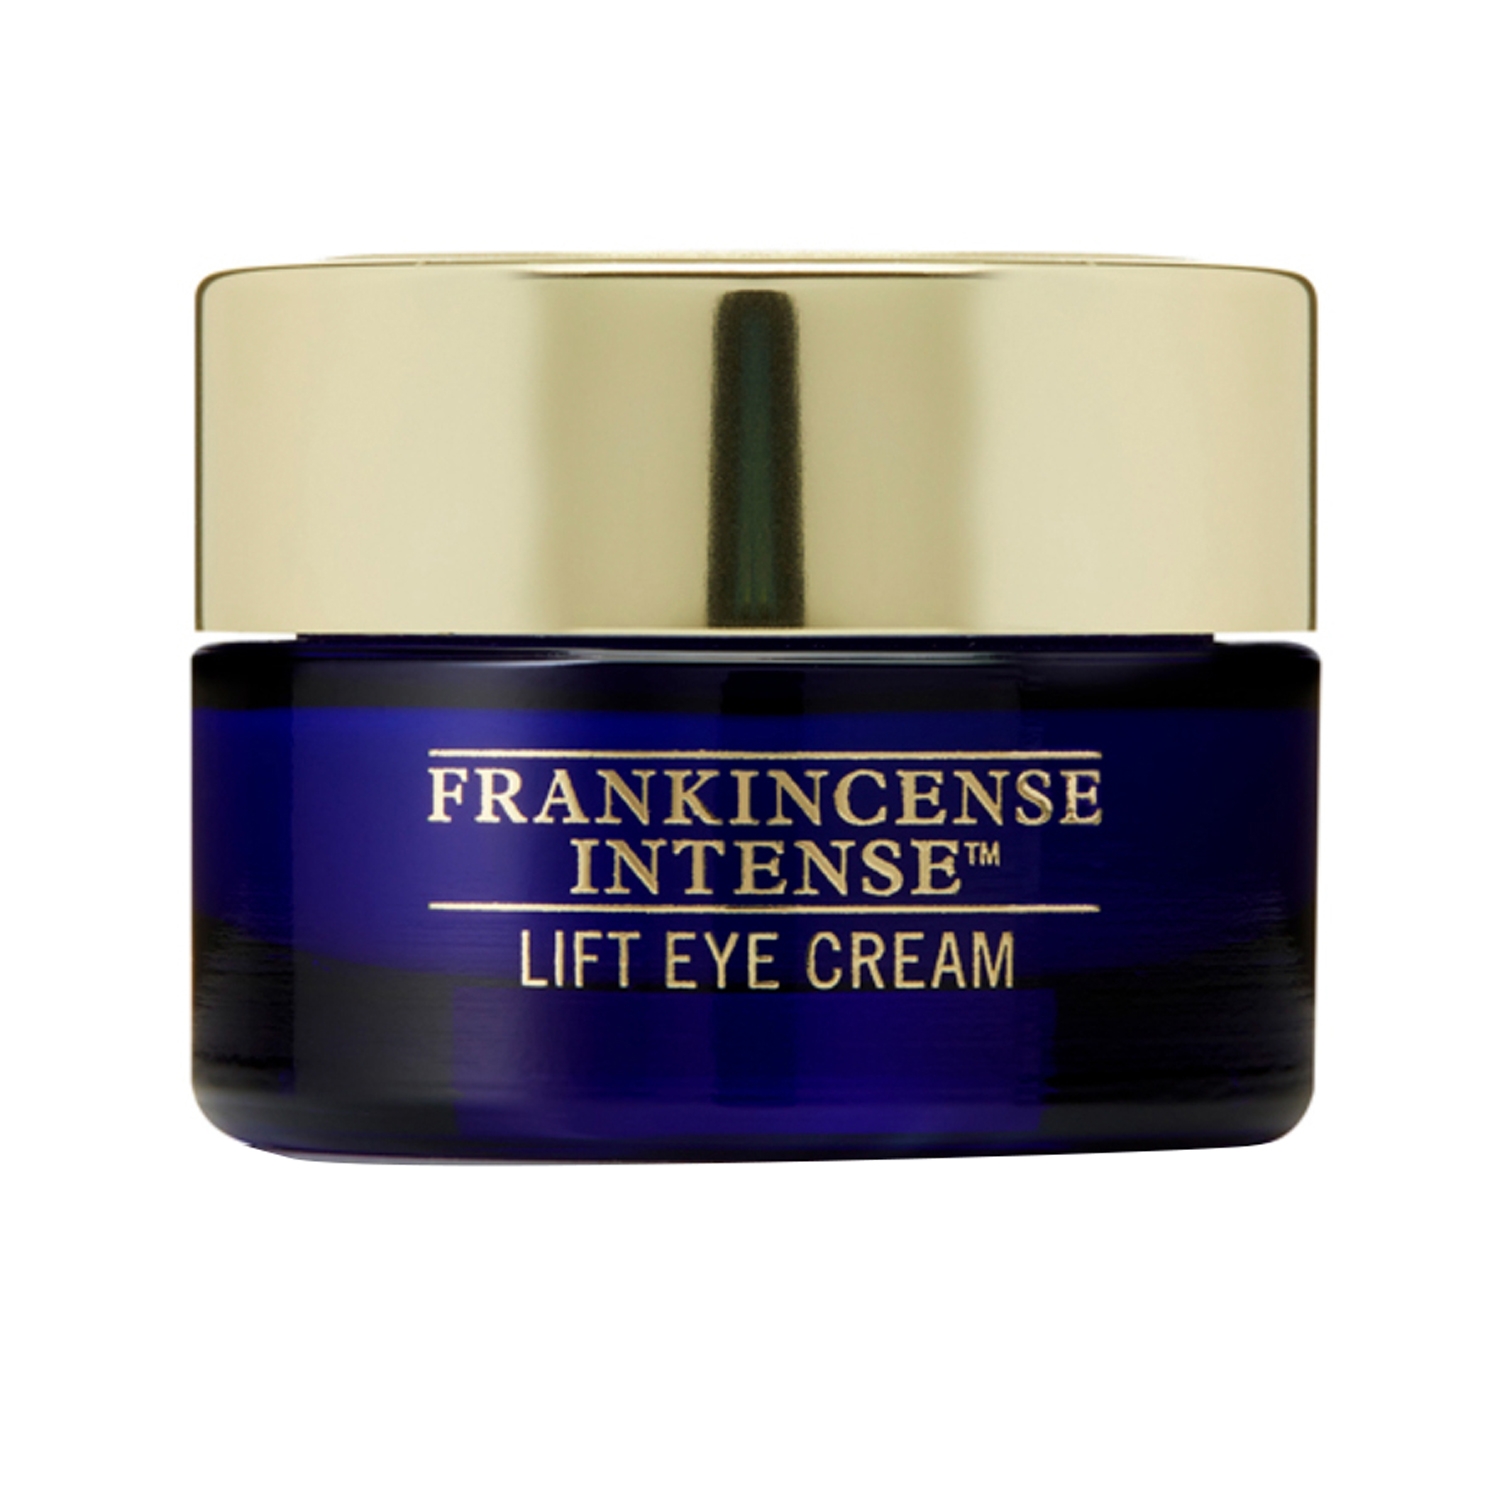 Neal's Yard Remedies | Neal's Yard Remedies Frankincense Intense Lift Eye Cream (15g)